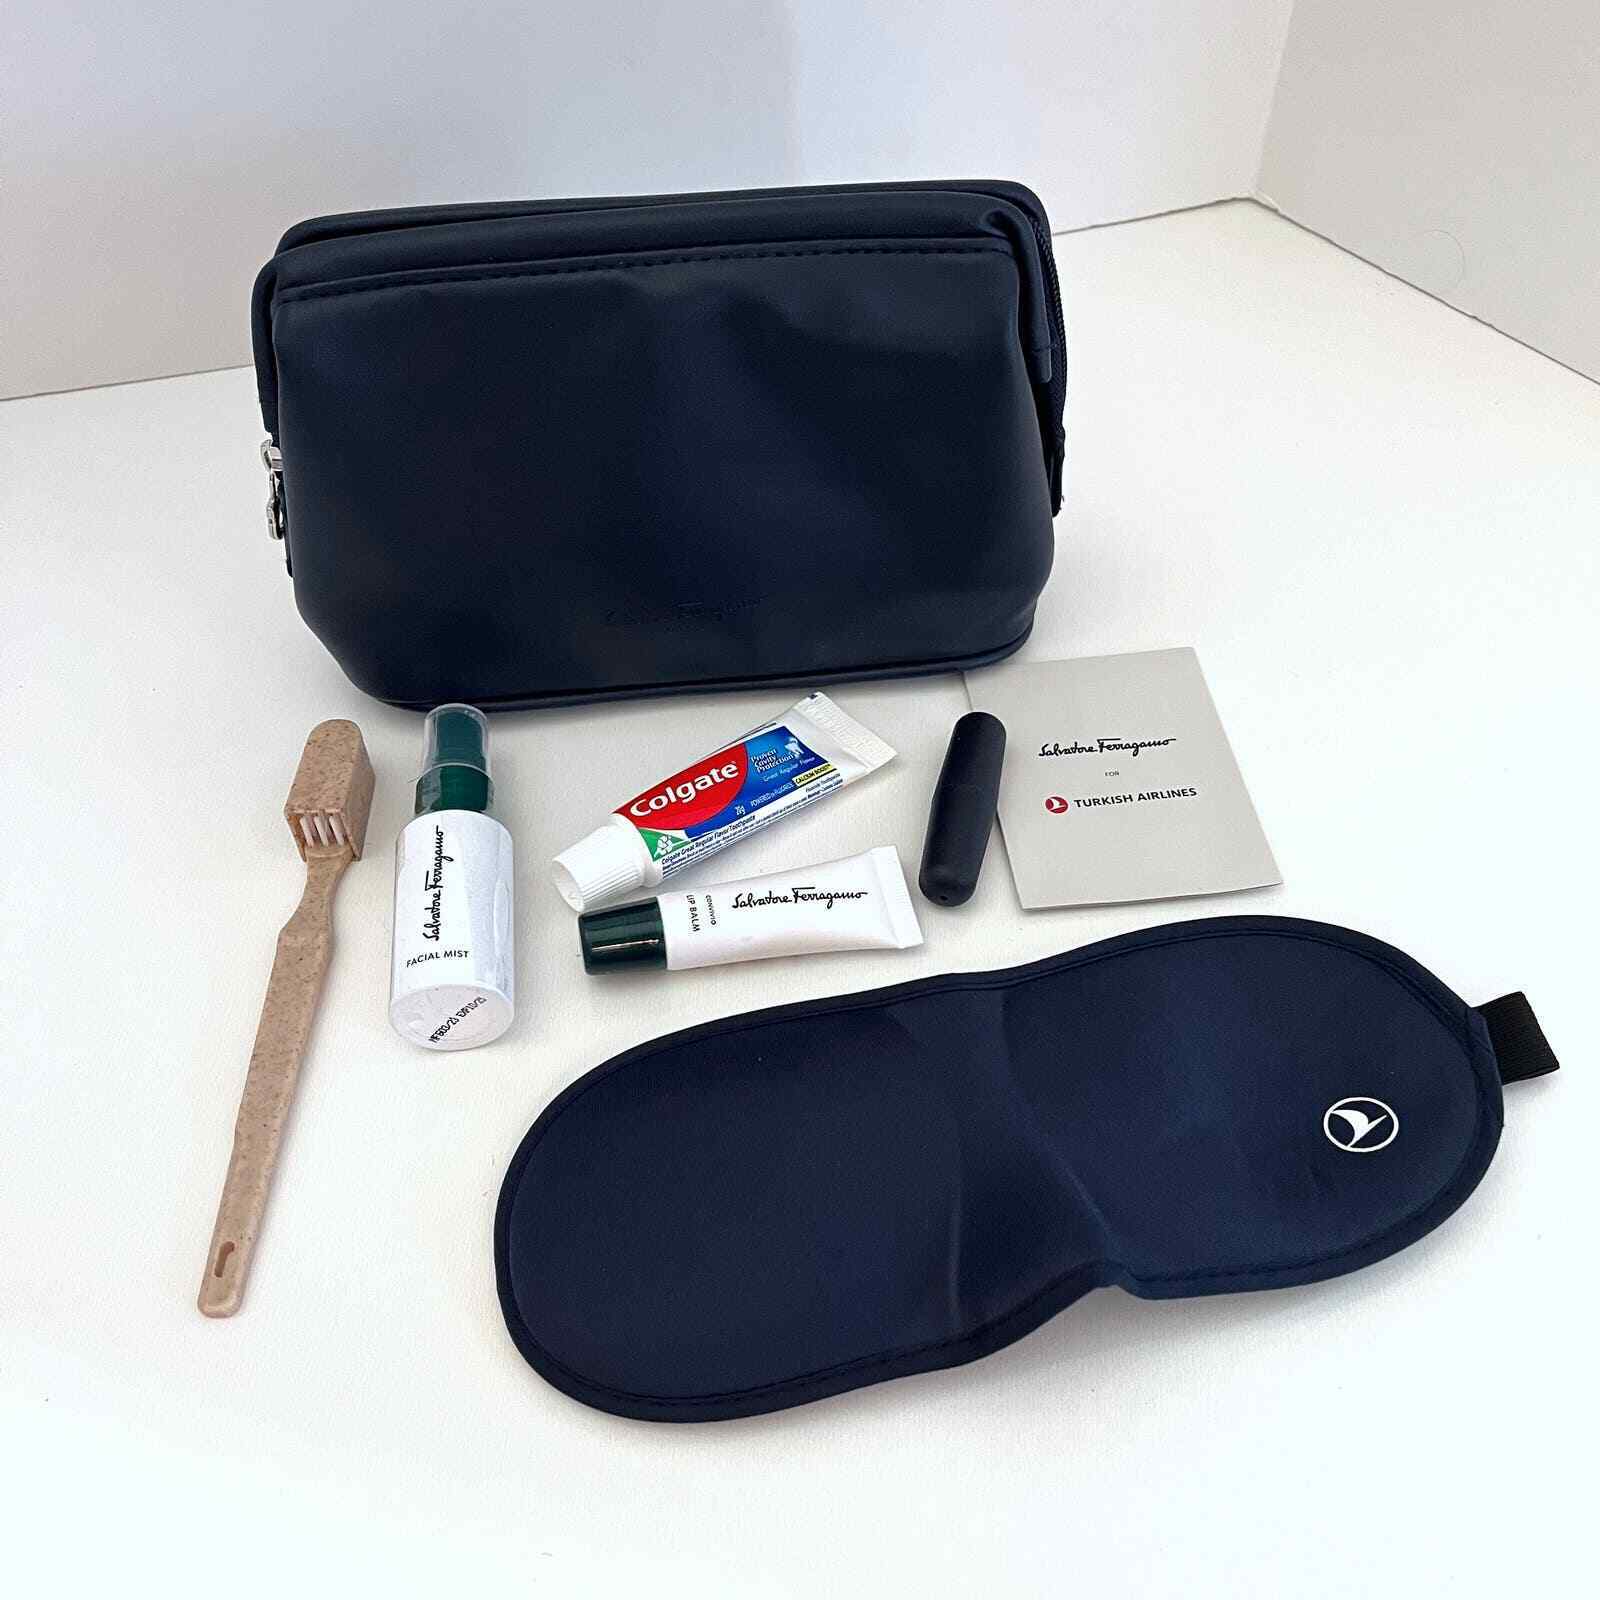 Salvatore Ferragamo Turkish Airlines Business Class Amenity Kit Toiletry Bag